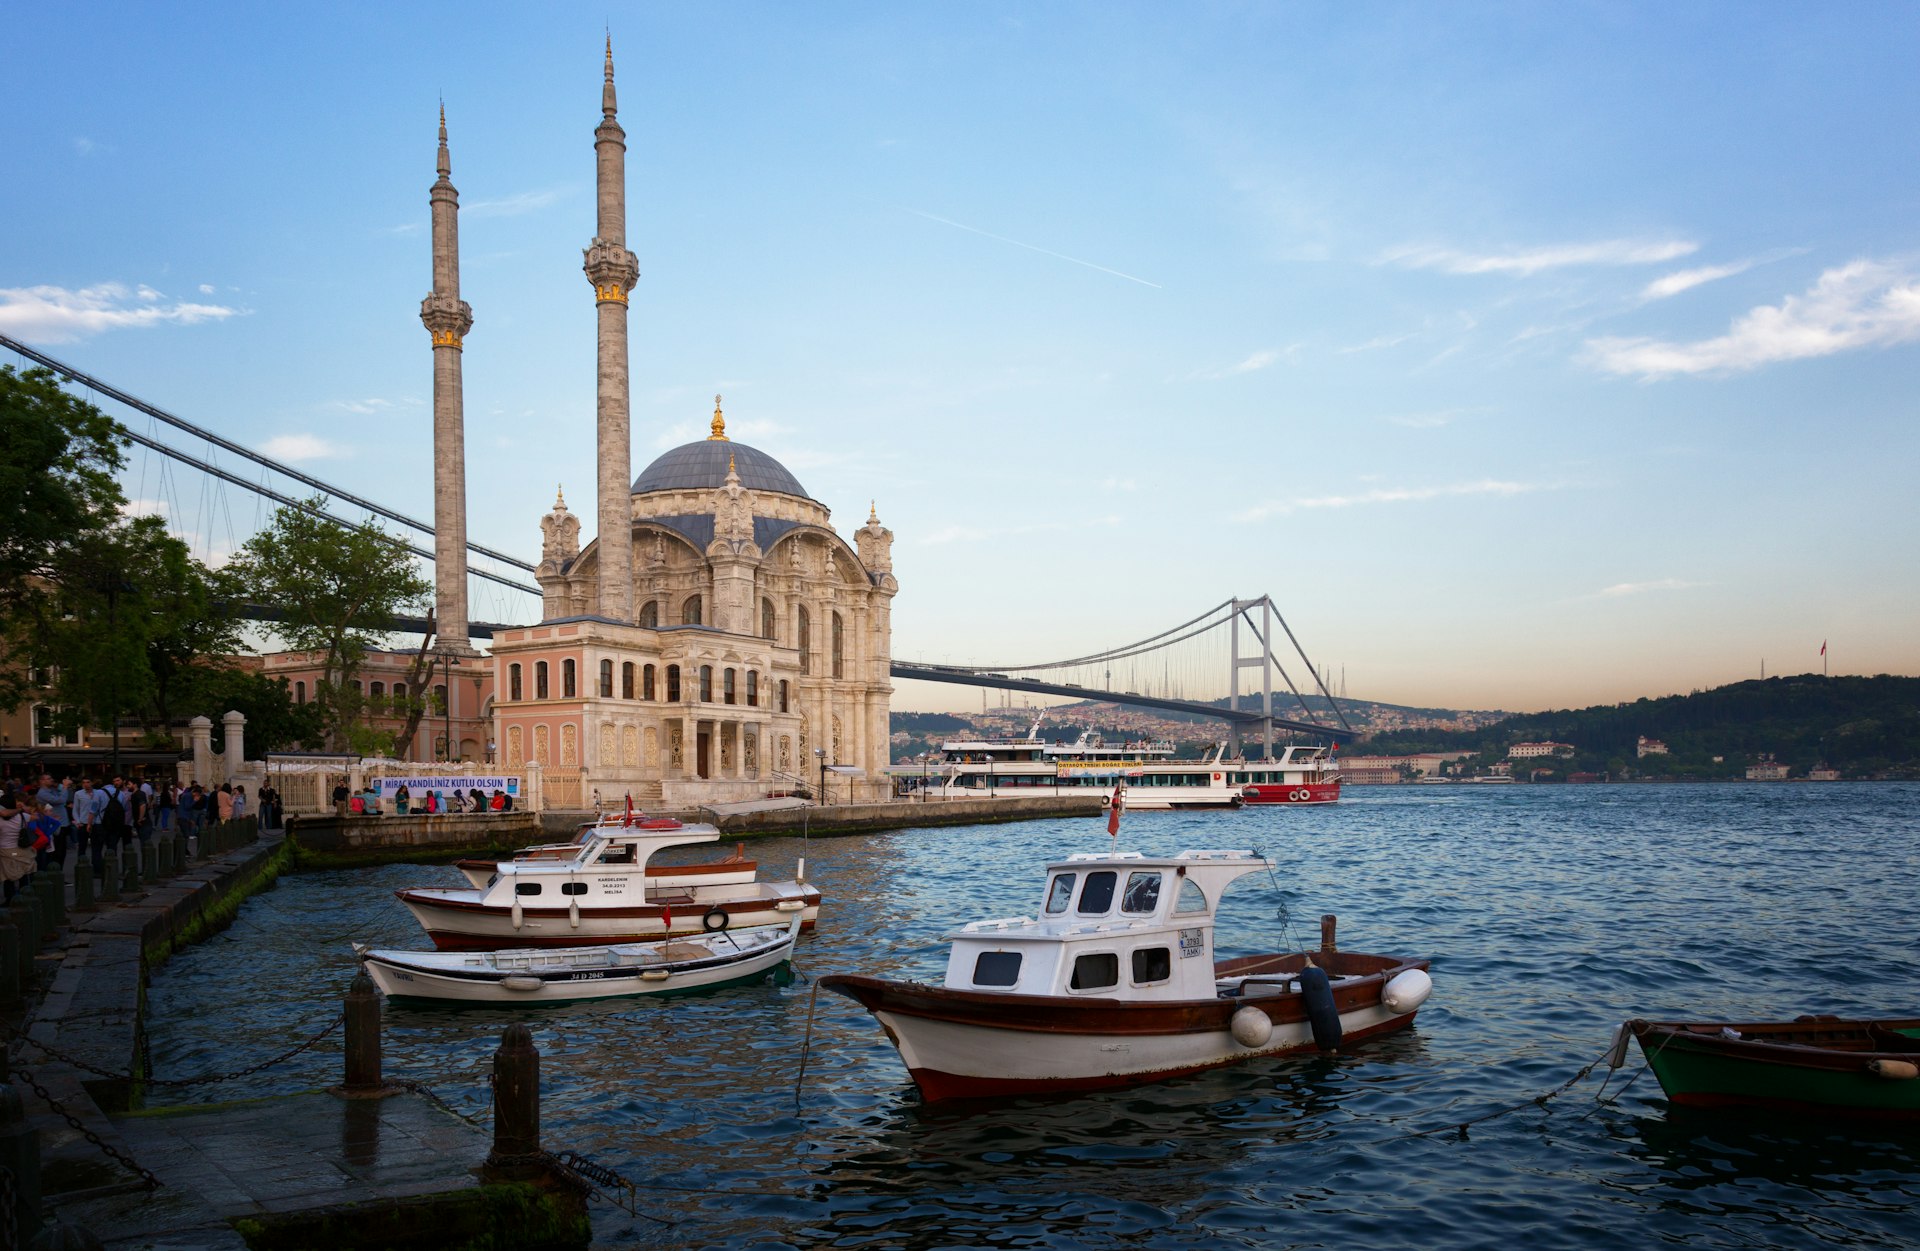 Boats in the Bosphorus Strait near Ortaköy Mosque in Beşiktaş, Istanbul